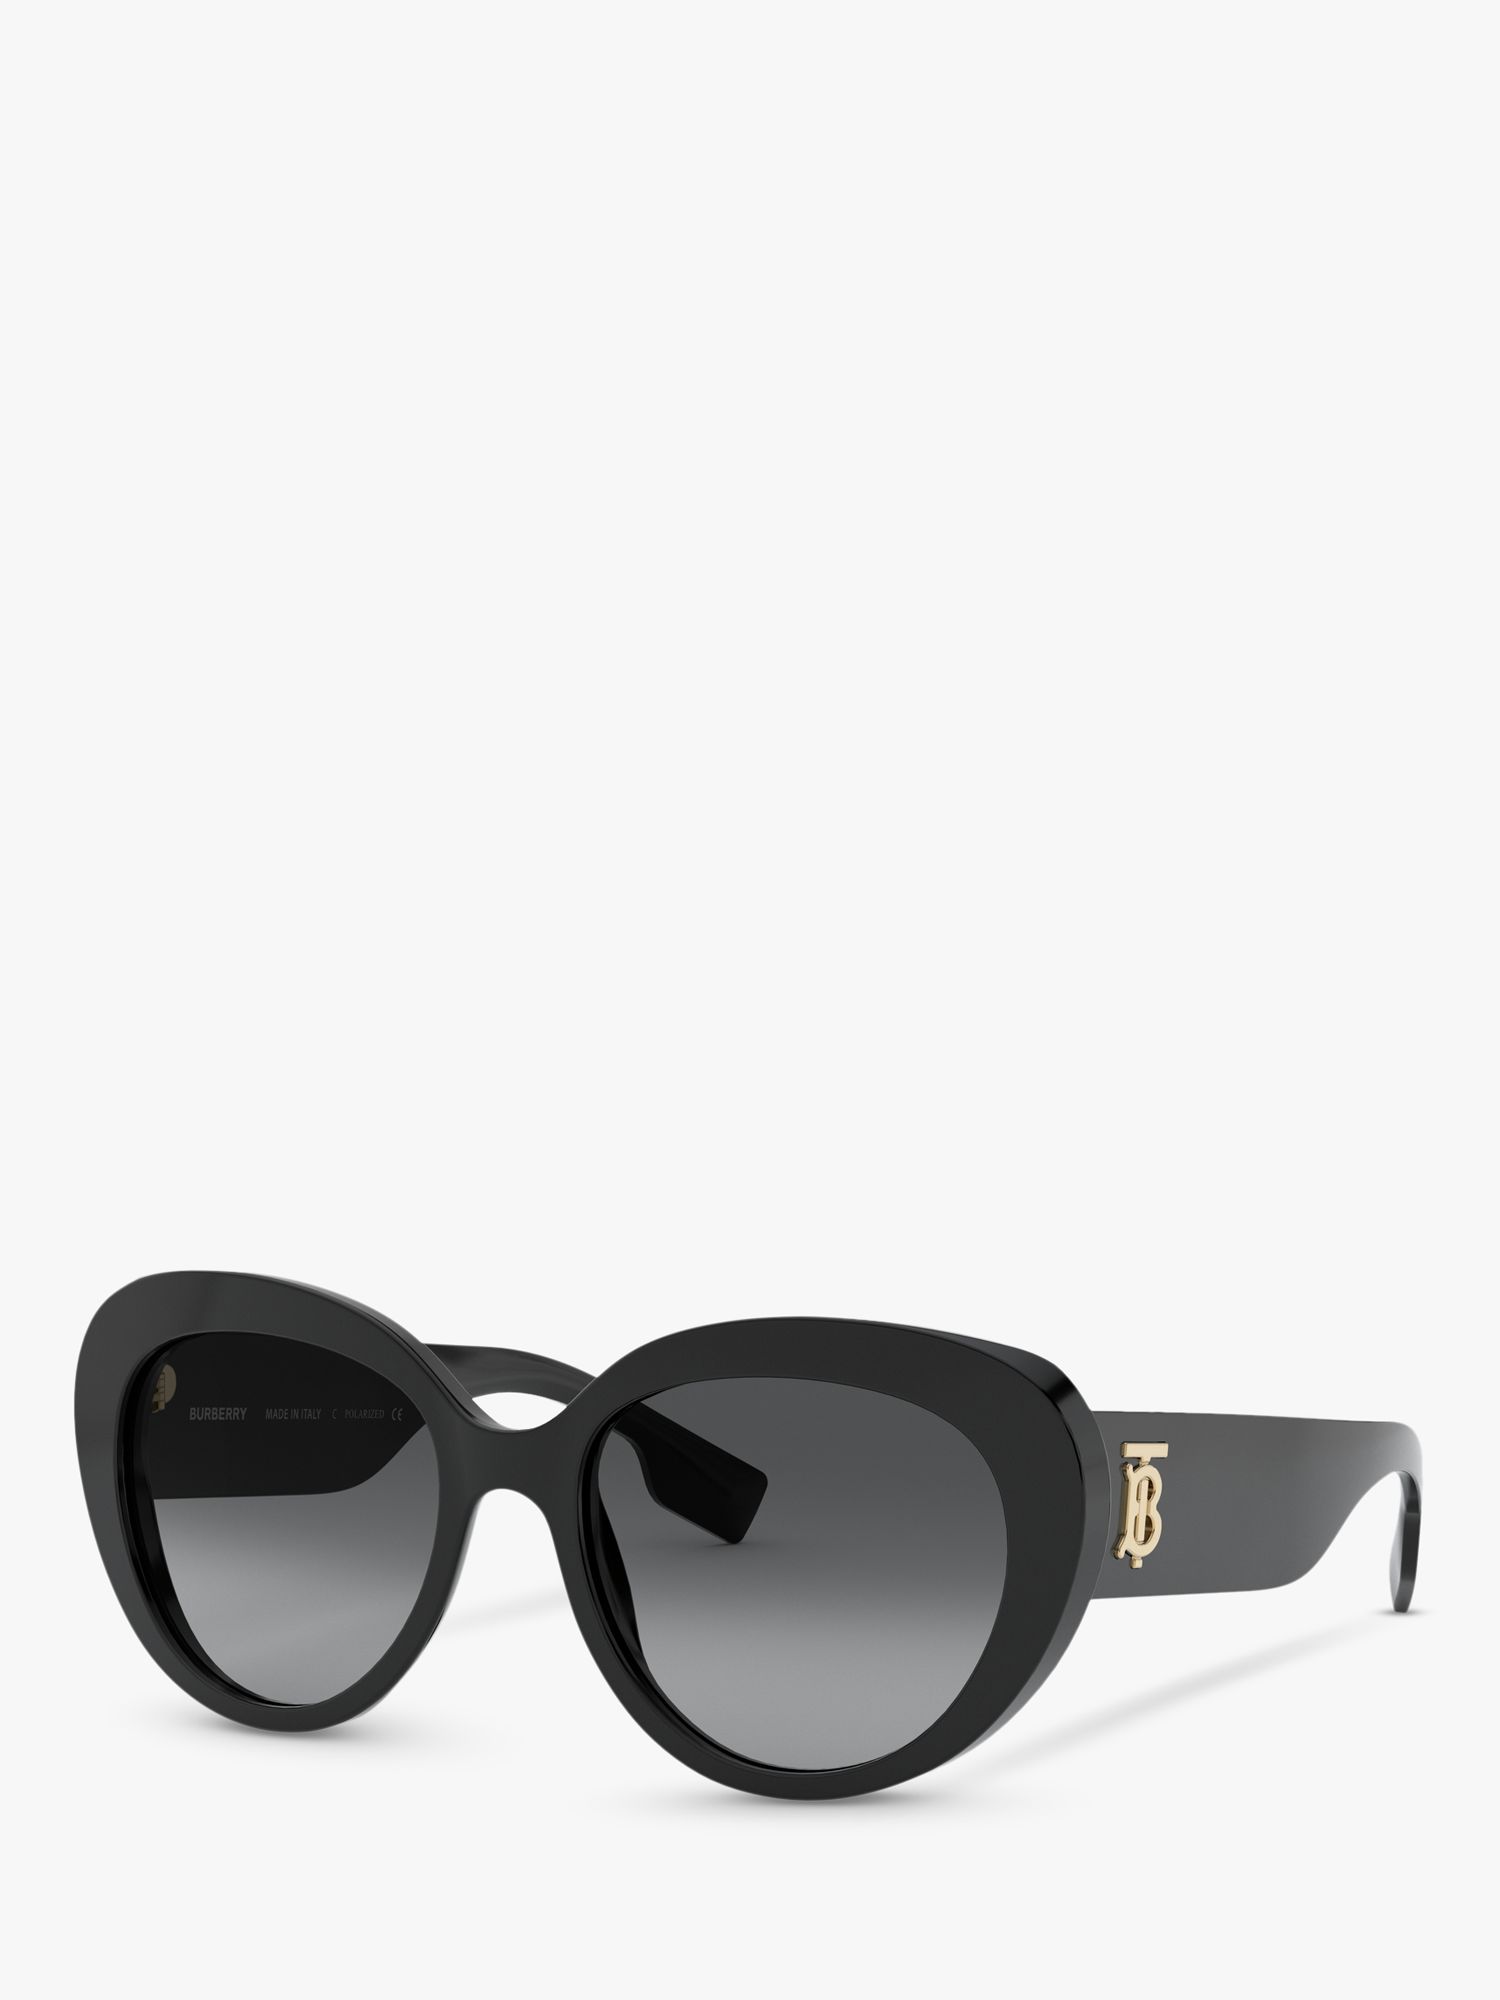 Eye Sunglasses, Black/Grey Gradient 